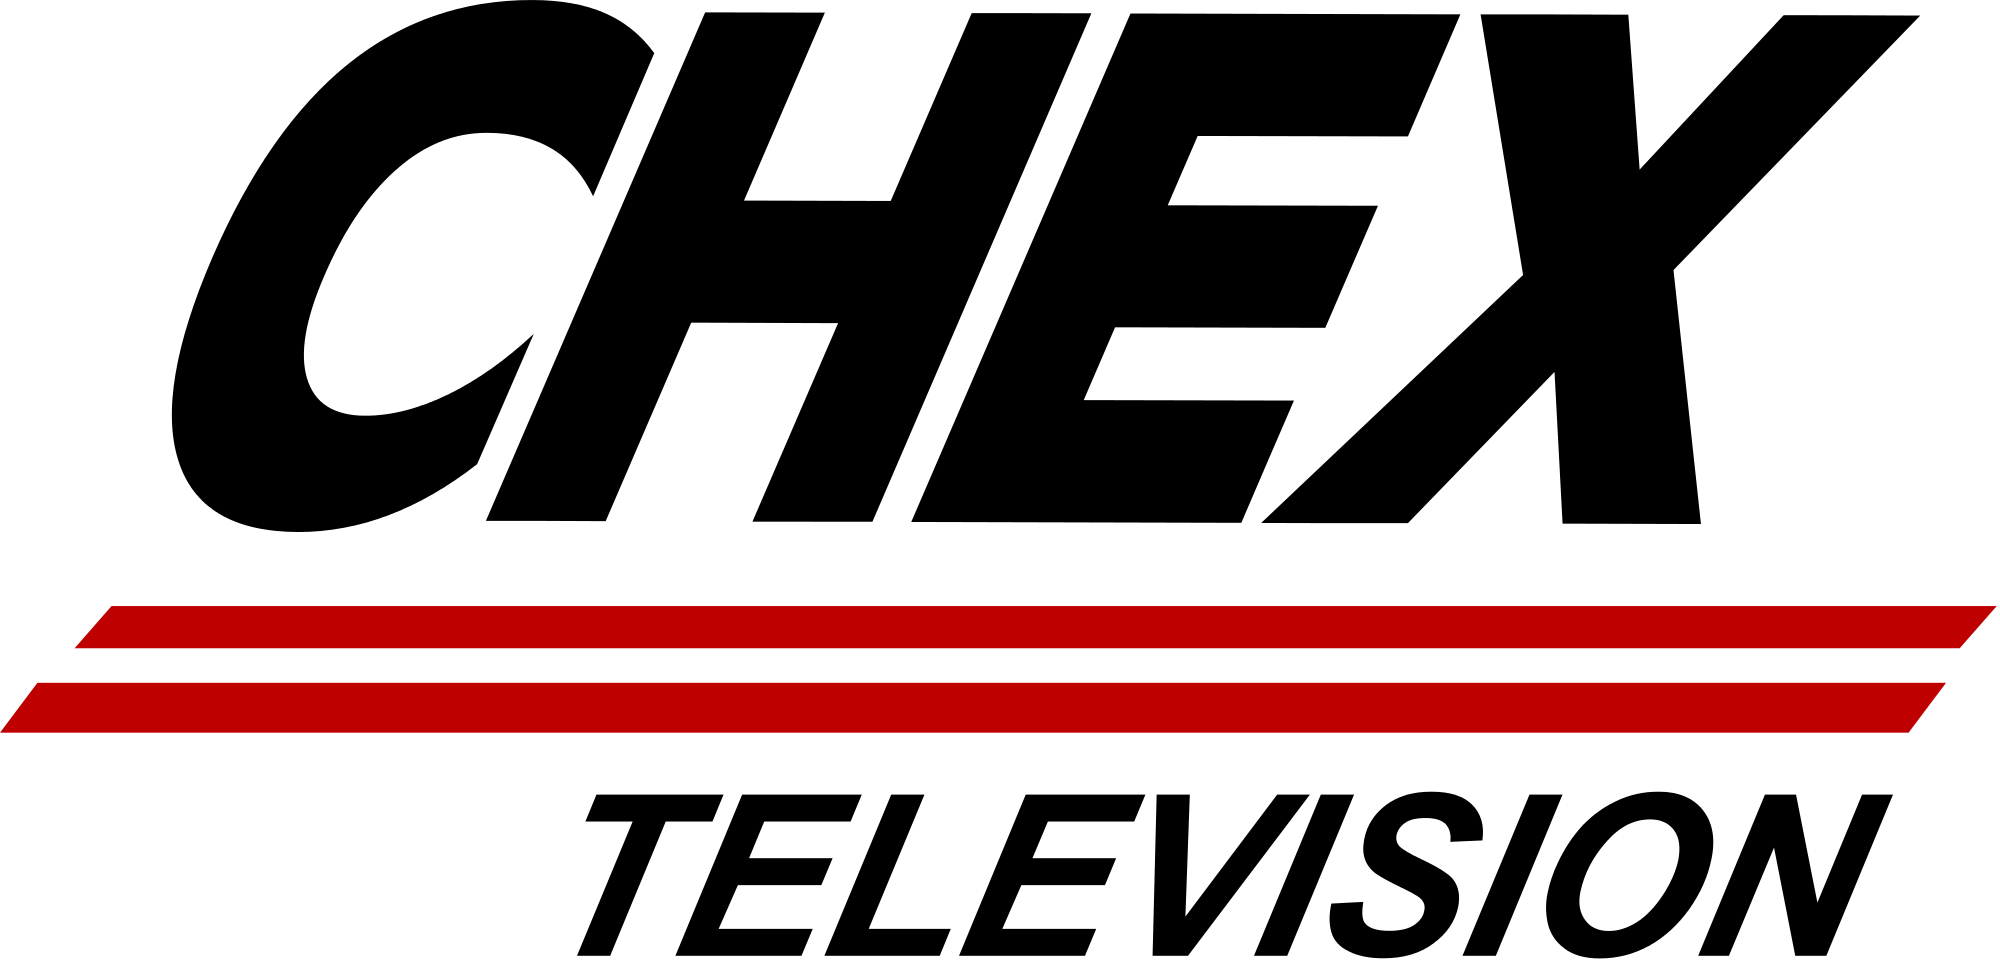 Chex Logo - File:CHEX-TV logo.svg - Wikimedia Commons